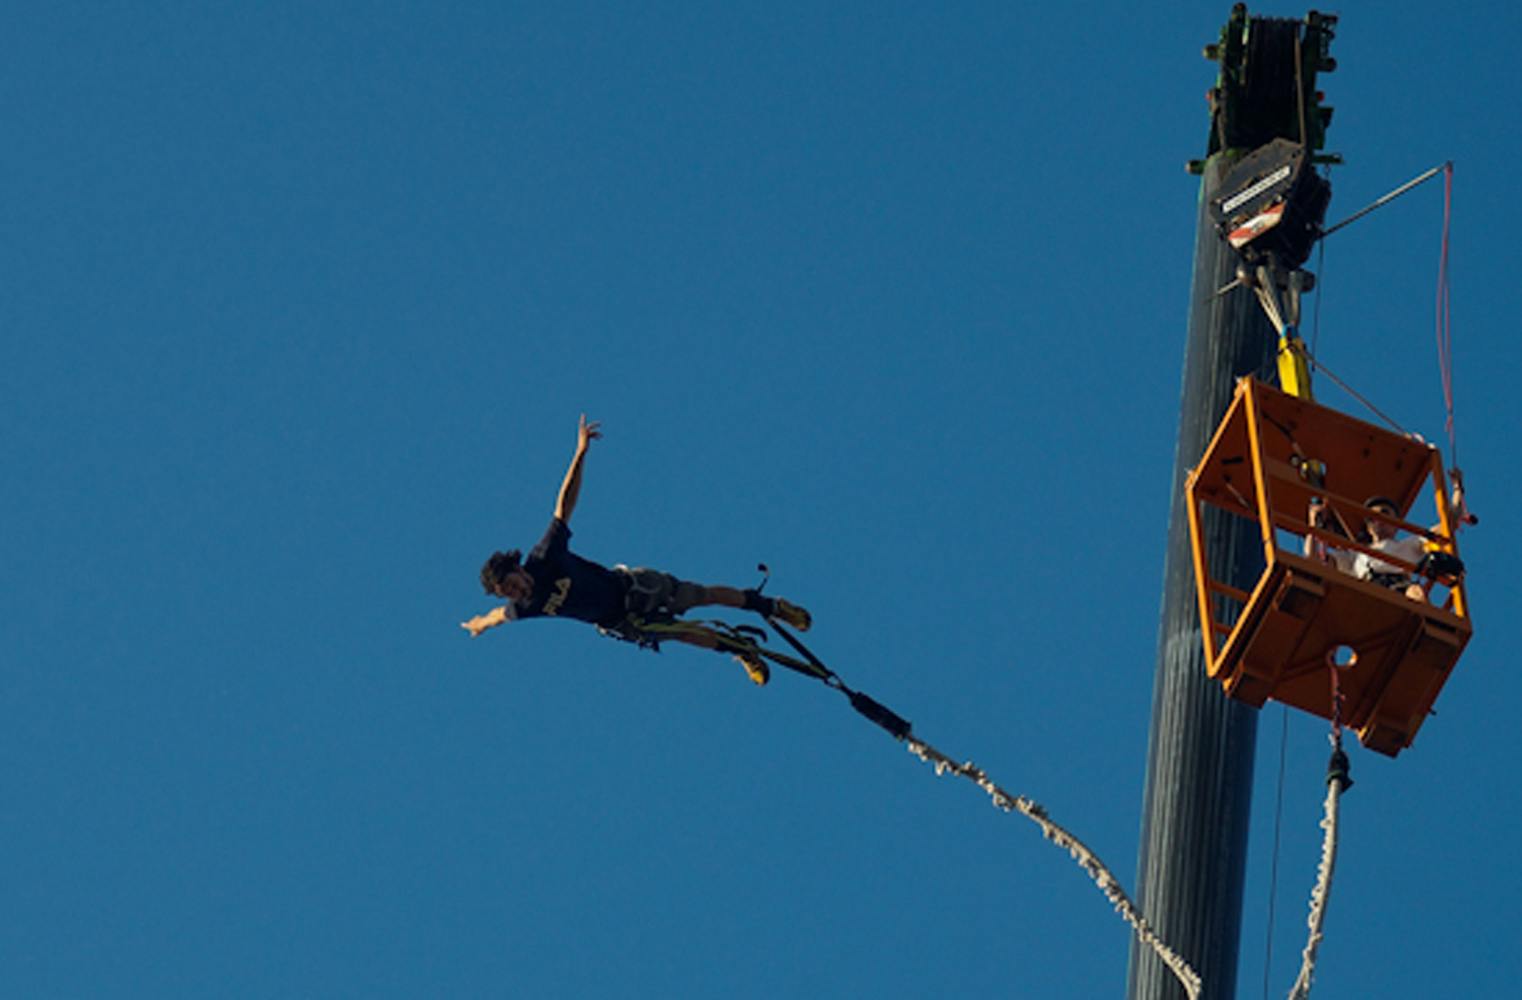 Bungee Jumping | freier Fall aus 50 Meter Höhe